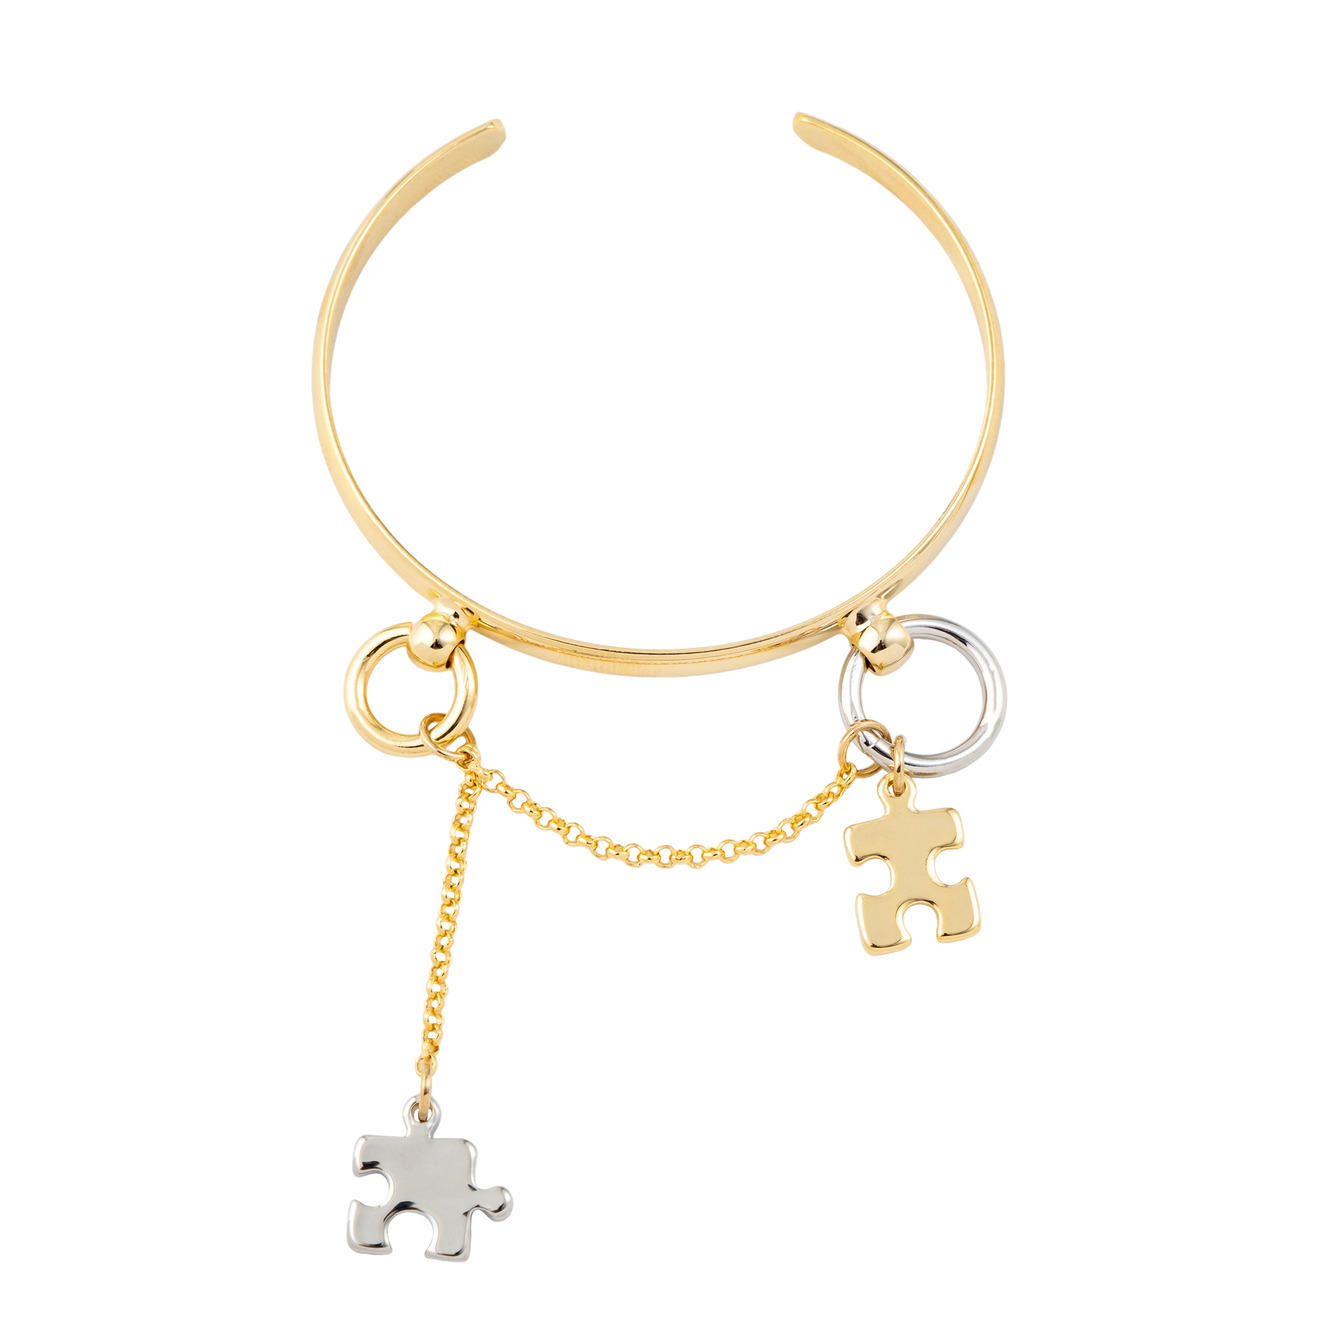 Aqua Золотистый браслет с подвесками-пазлами aqua золотистый браслет с медальоном с сердцем